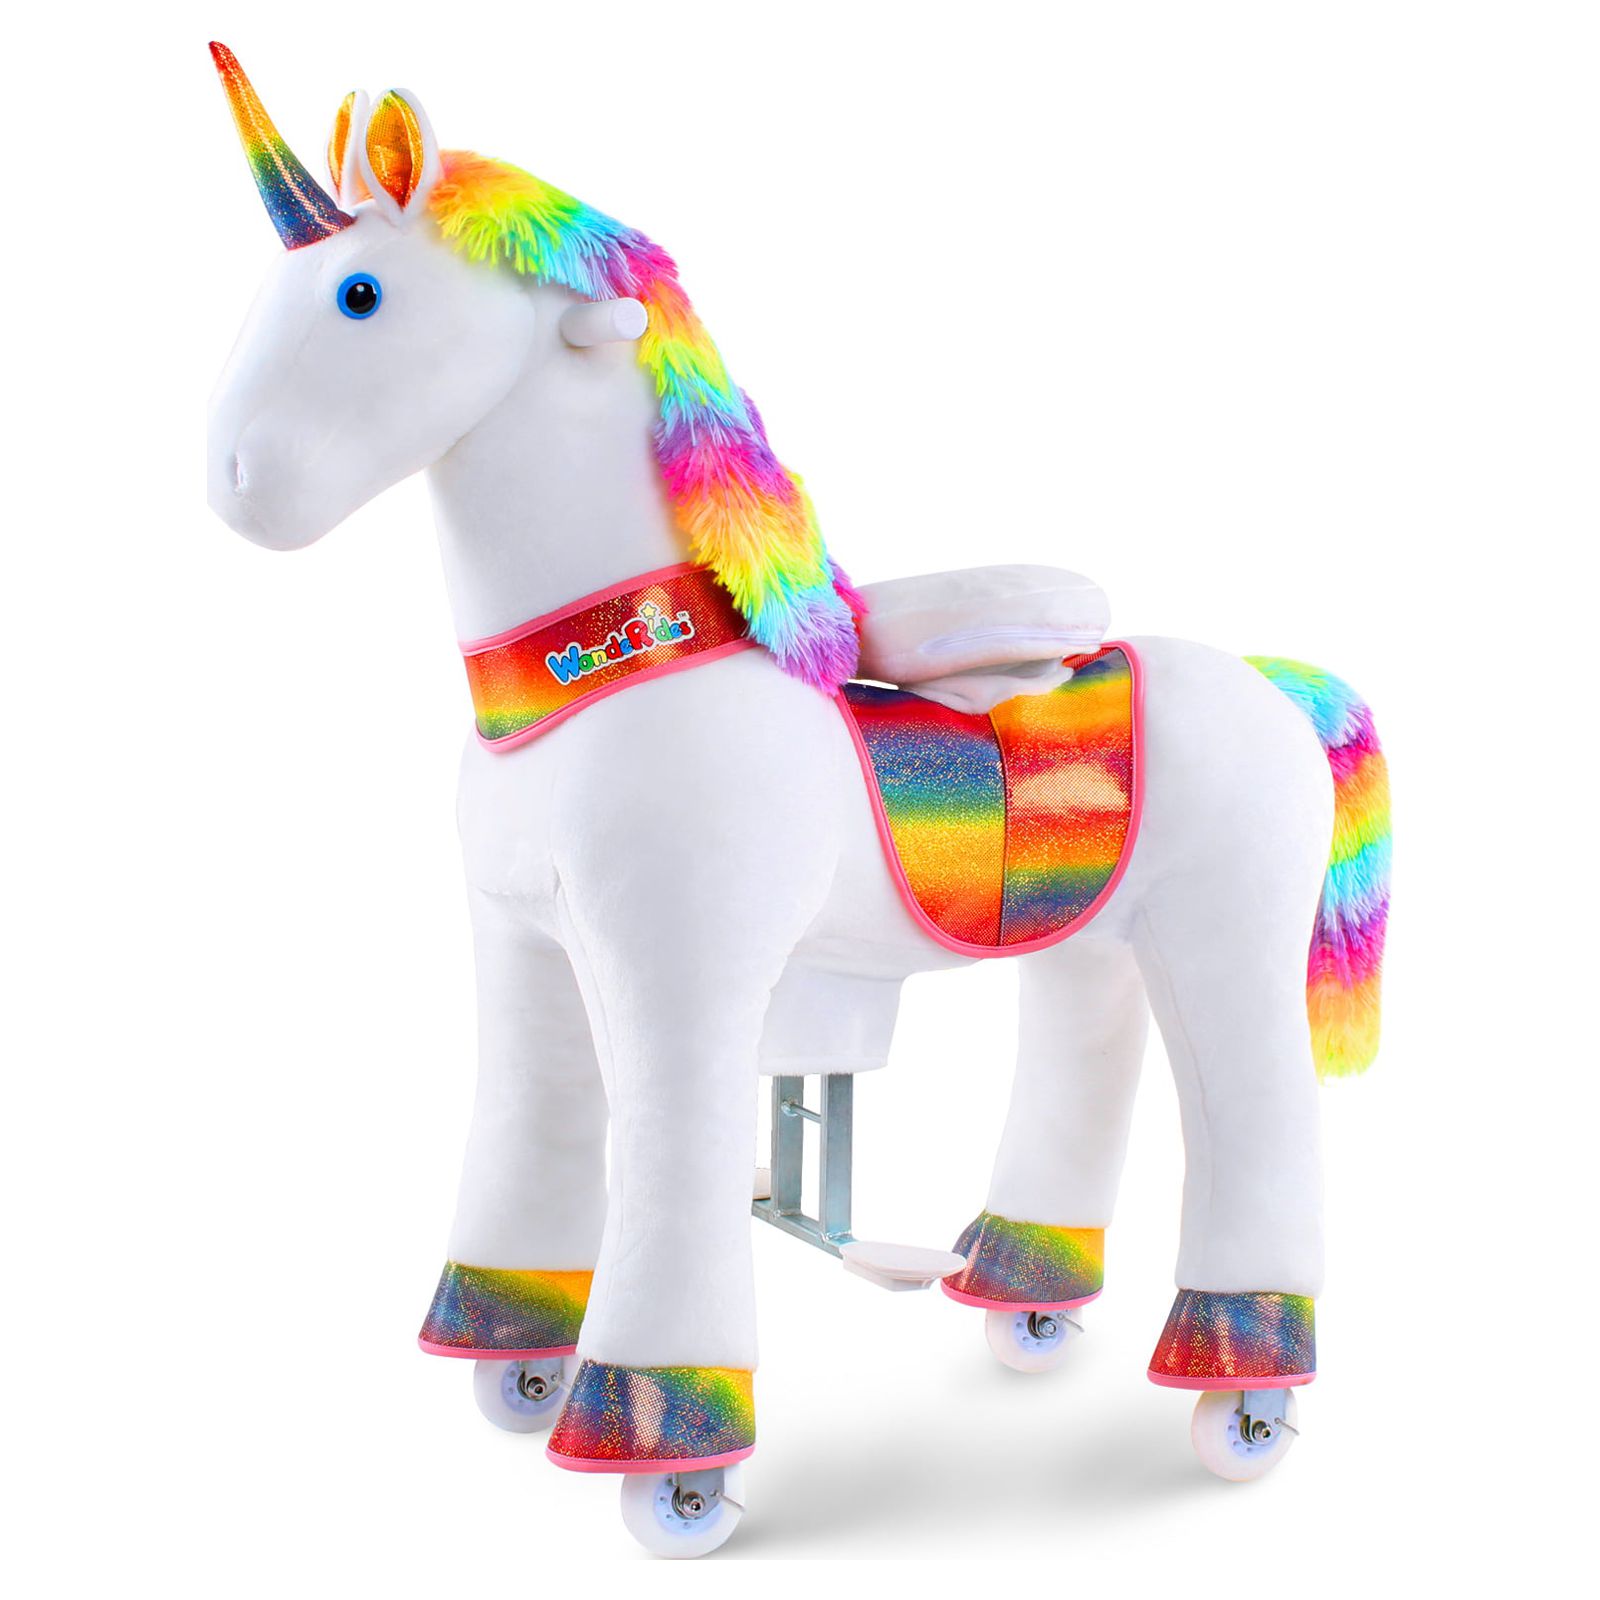 WondeRides Ride on Rainbow Unicorn Horse, Rocking Horse Riding Pony Toy (Medium Size 4, Height 36 Inch) for Ages 4-9 Years Kids Toys, Mechanical Moving Giddy up Walking Horse Plush Animal with Wheels - image 4 of 10